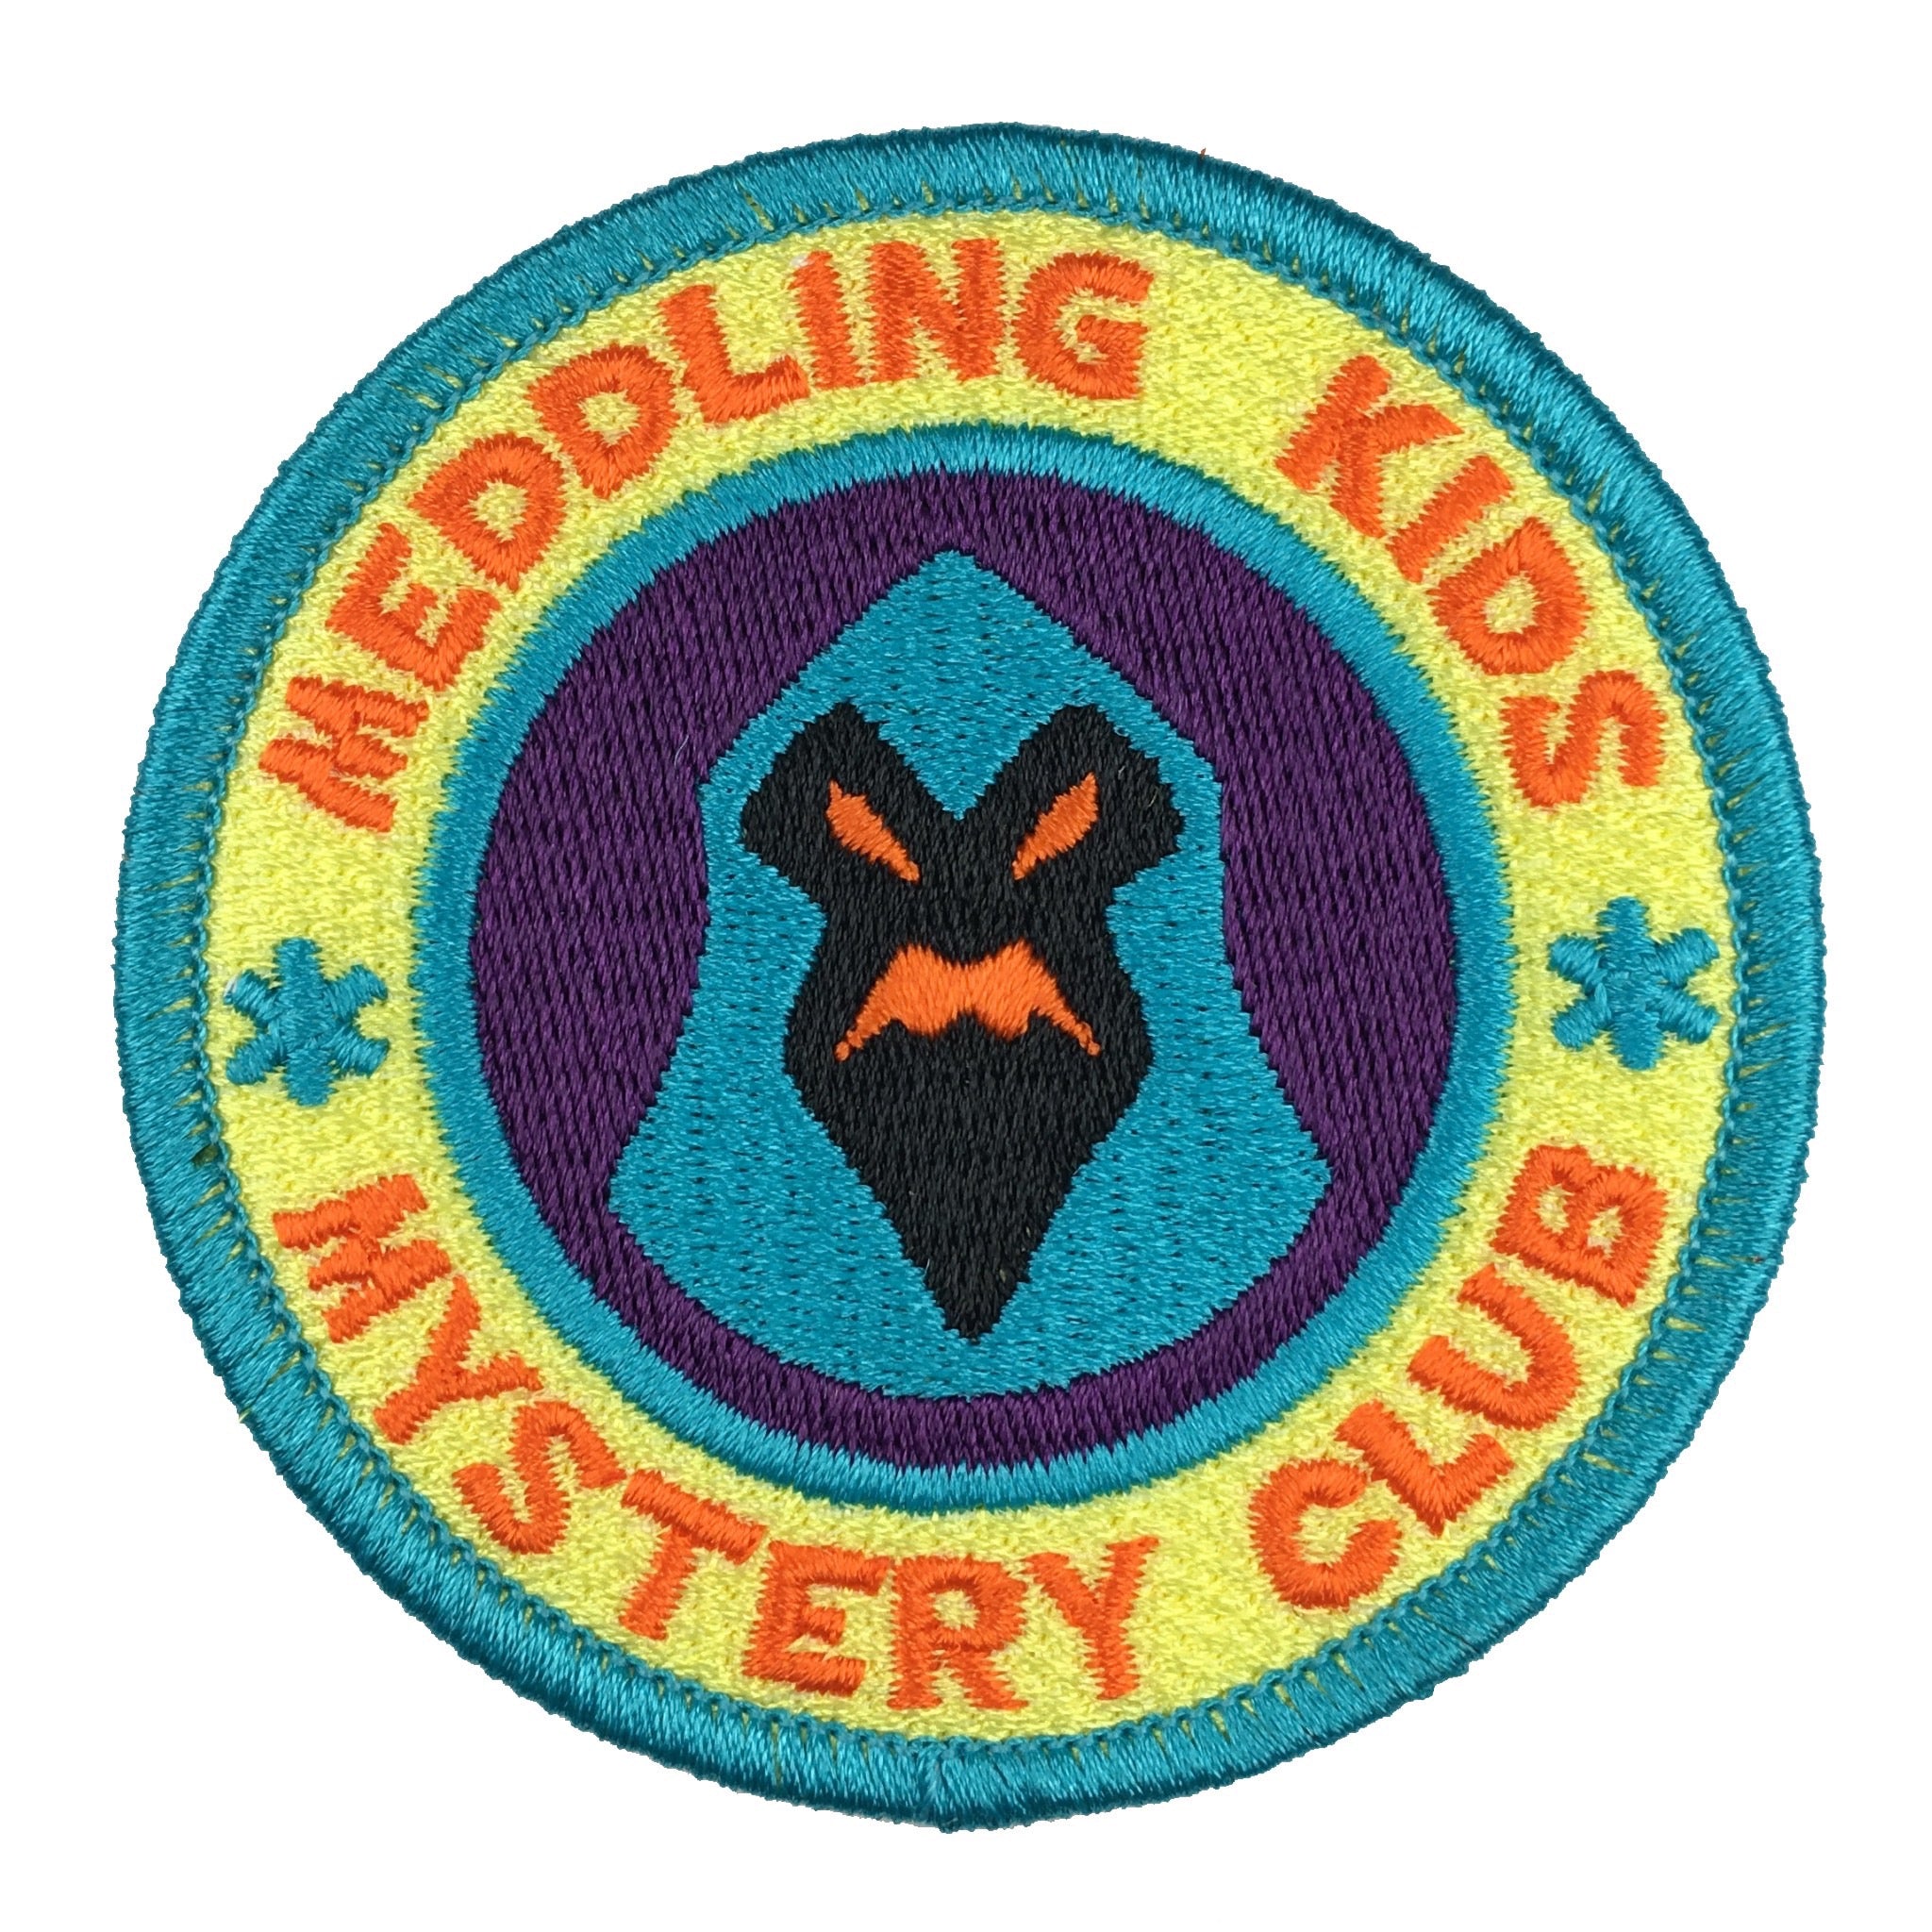 Meddling Kids Mystery Club patch – Monsterologist